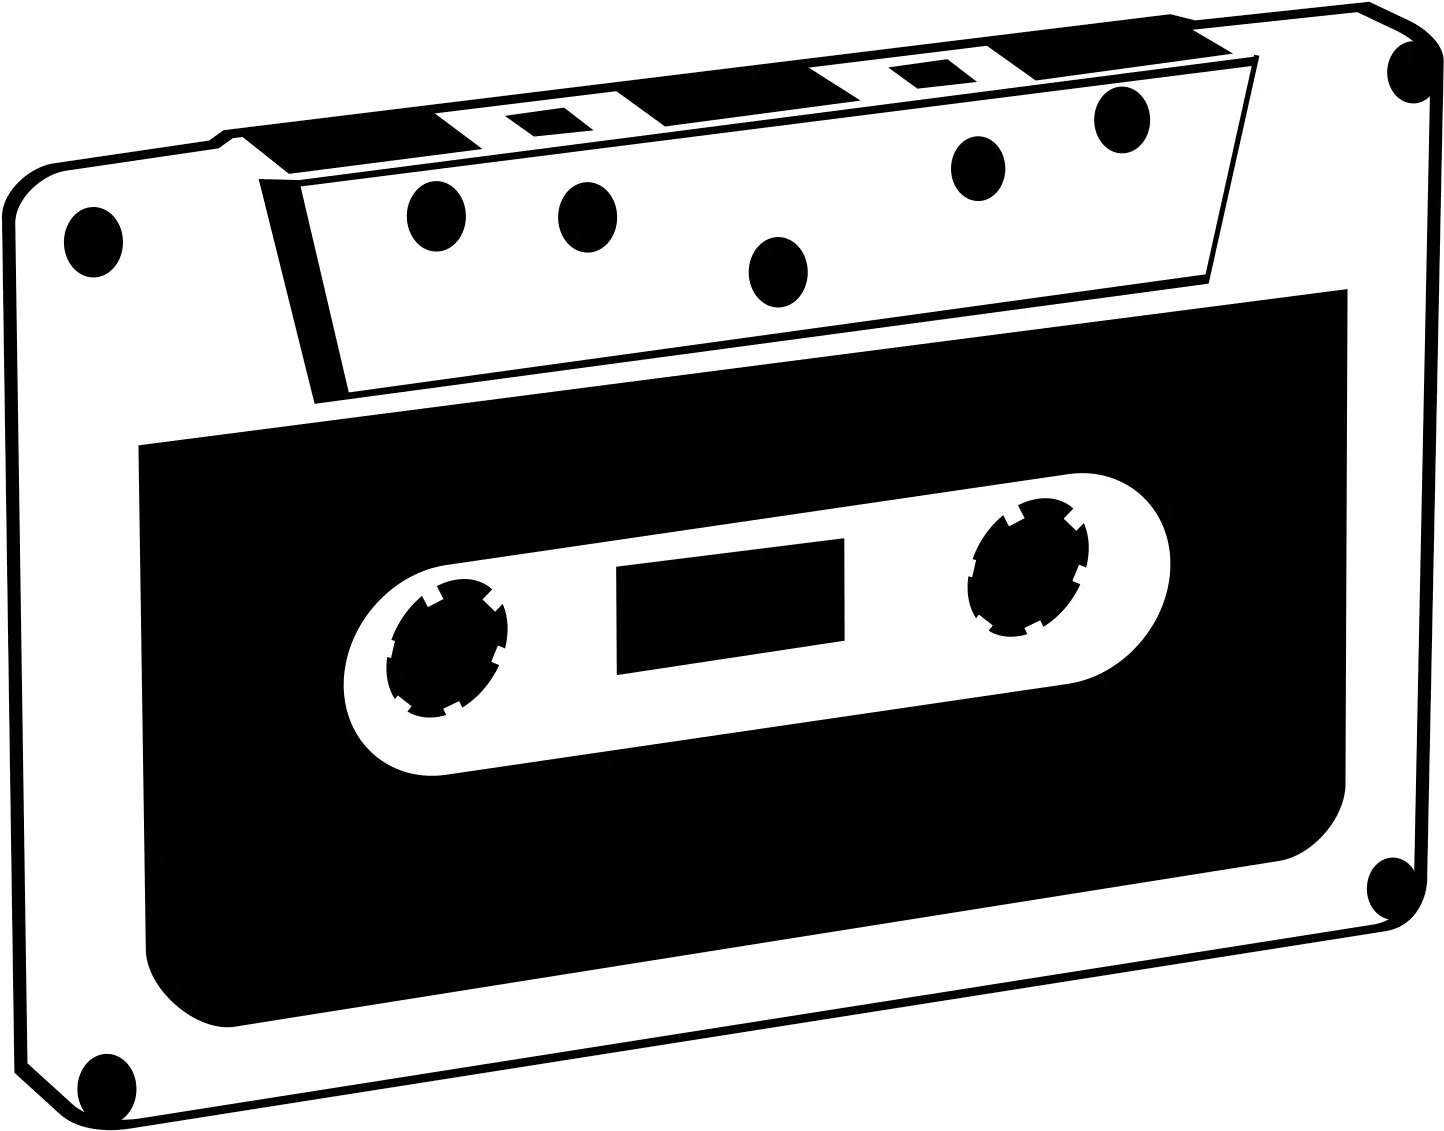 Audio Cassette Png Images Free Download Cassette Tape Vector Art Cassette Tape Png